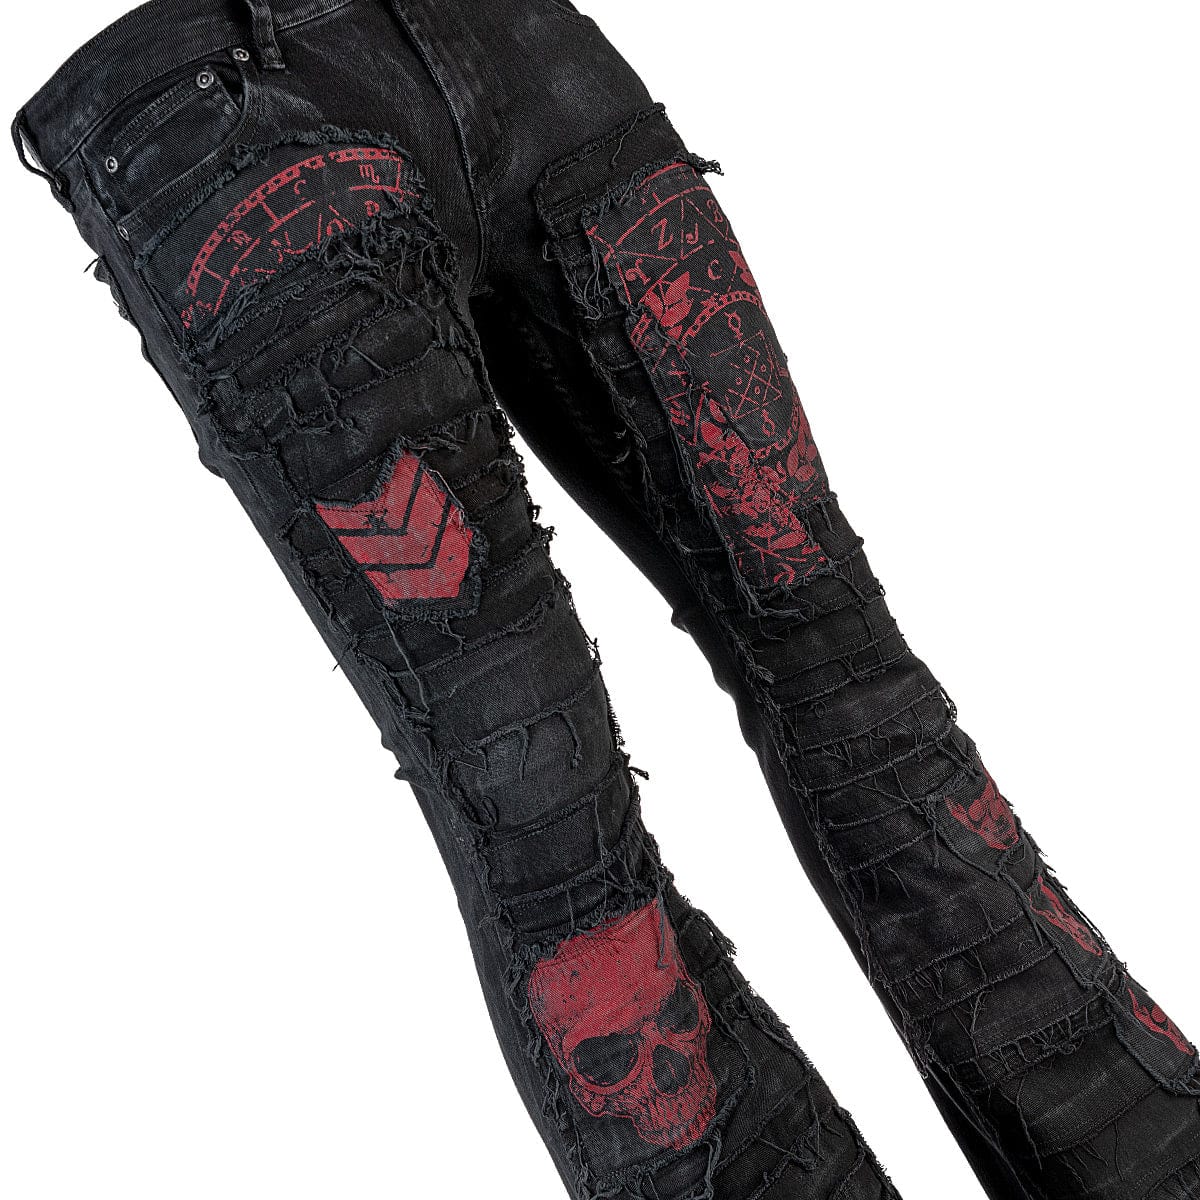 Wornstar Custom Jeans - Wild Side Rockstar Original Red